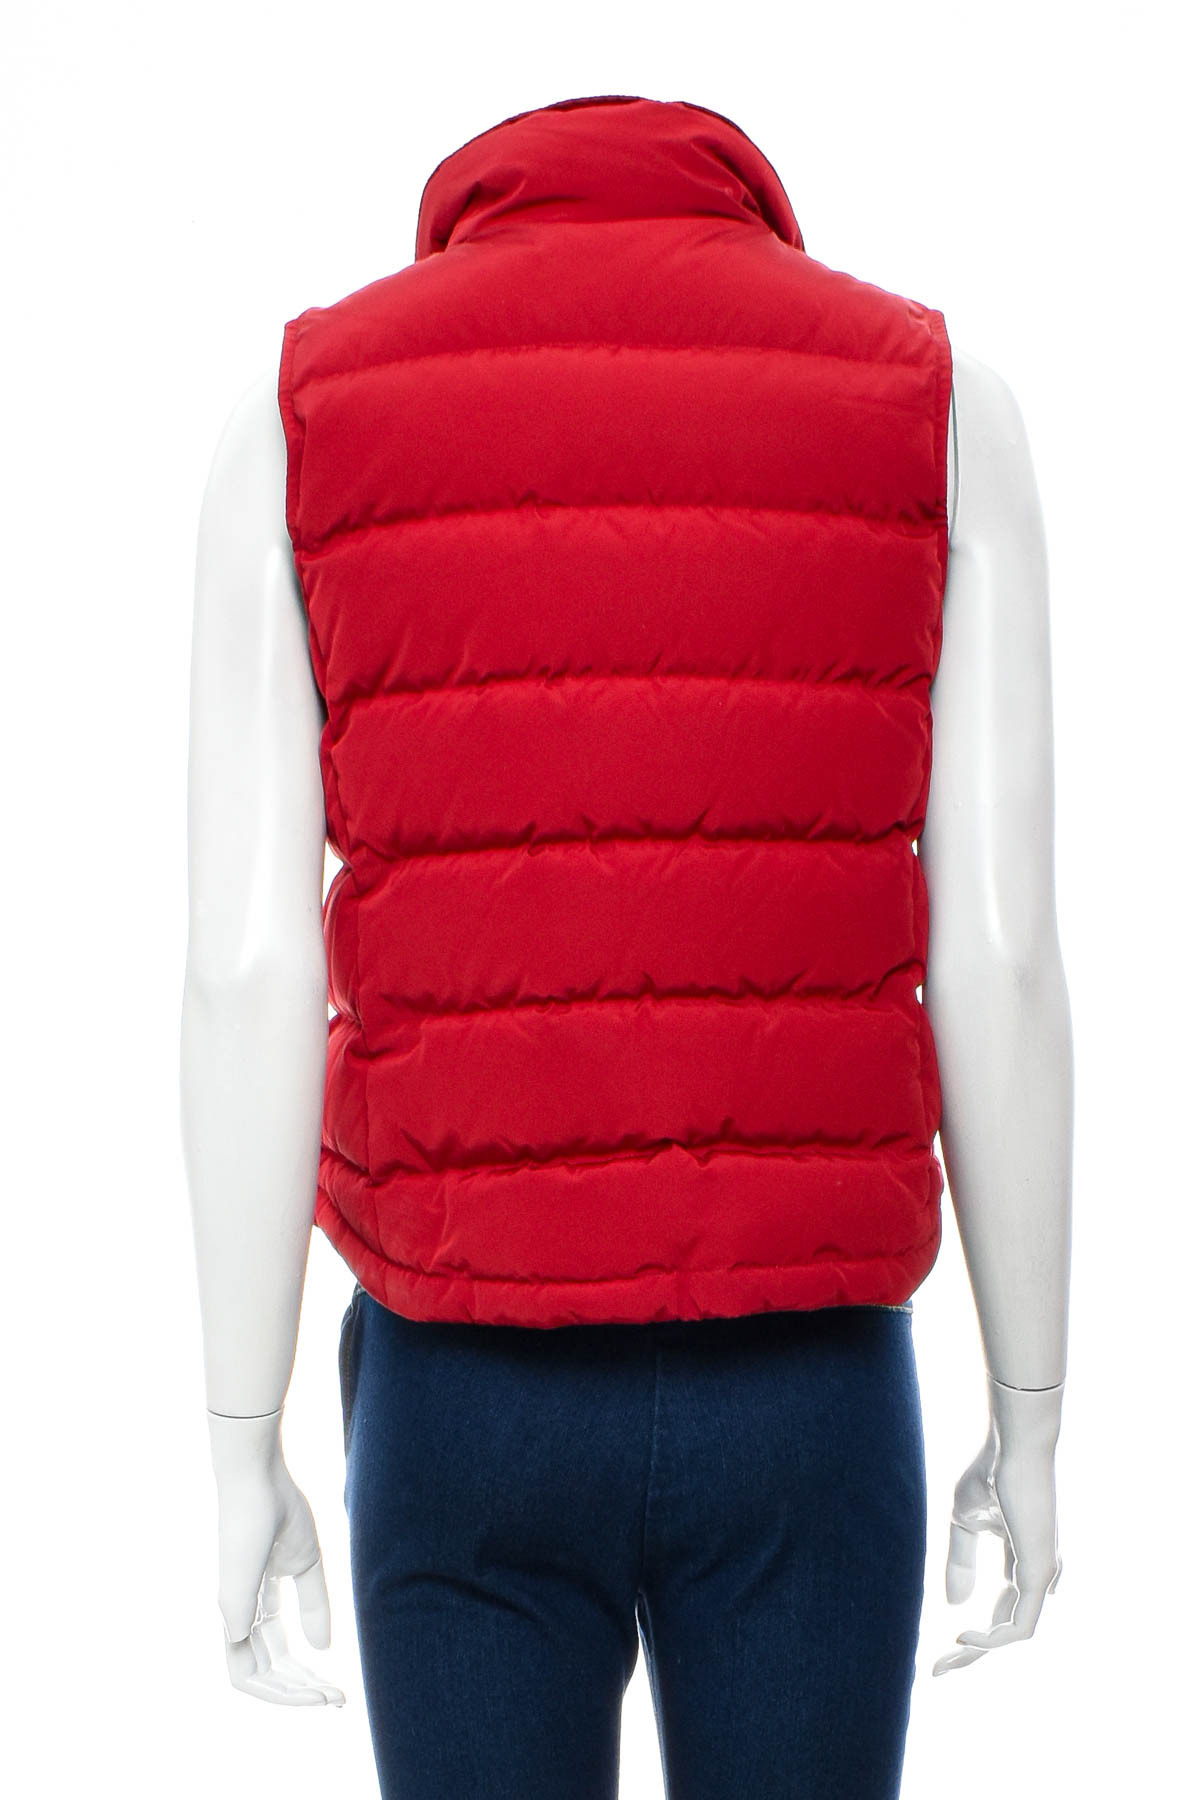 Women's vest - Talbots - 1